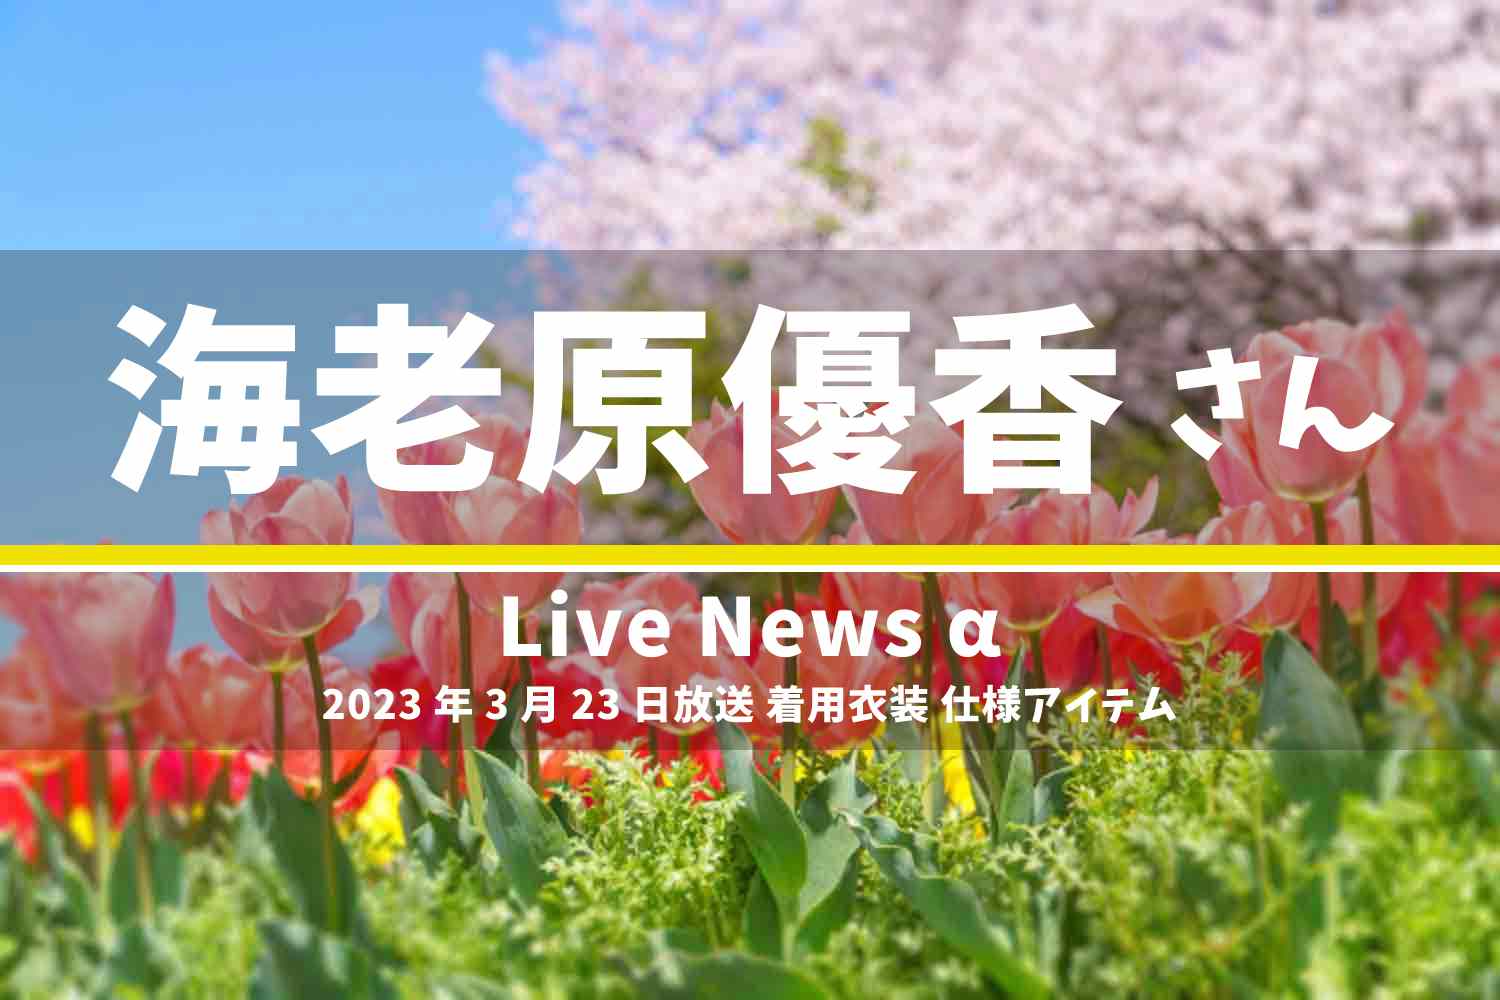 FNN Live News α 海老原優香さん 番組 衣装 2023年3月23日放送